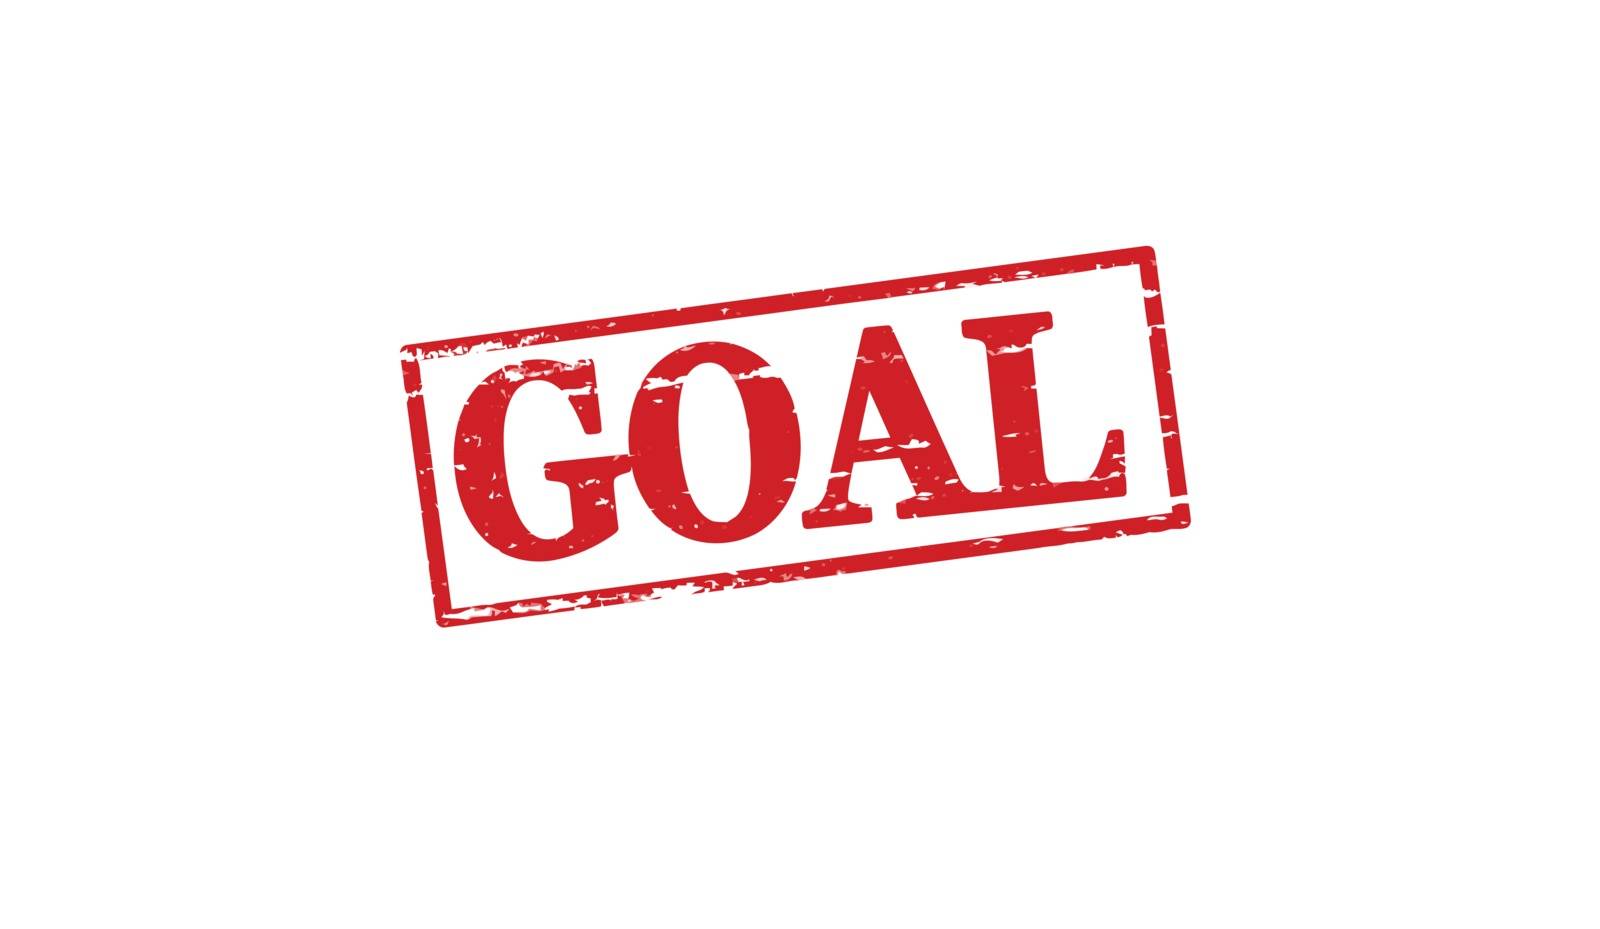 Goal by carmenbobo